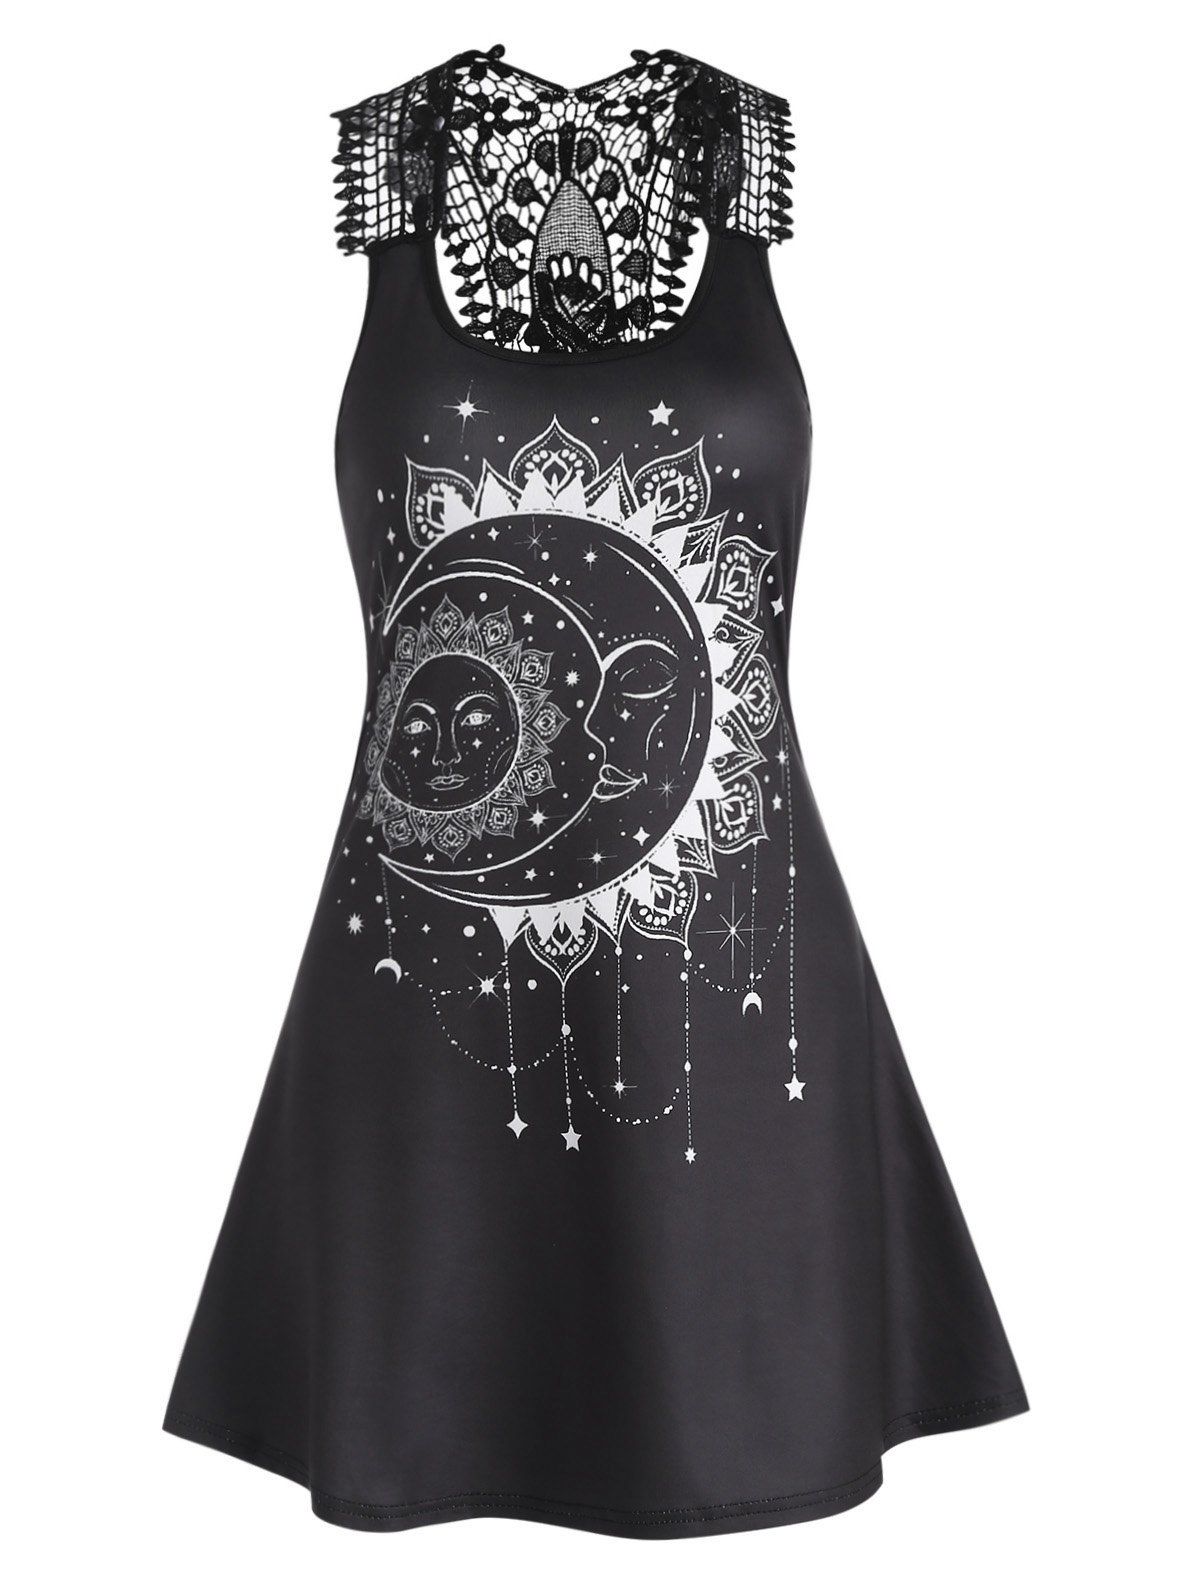 Vintage Tank Dress Sun Moon Star Print Flower Lace Panel Hollow Out A Line Mini Summer Casual Dress - BLACK L